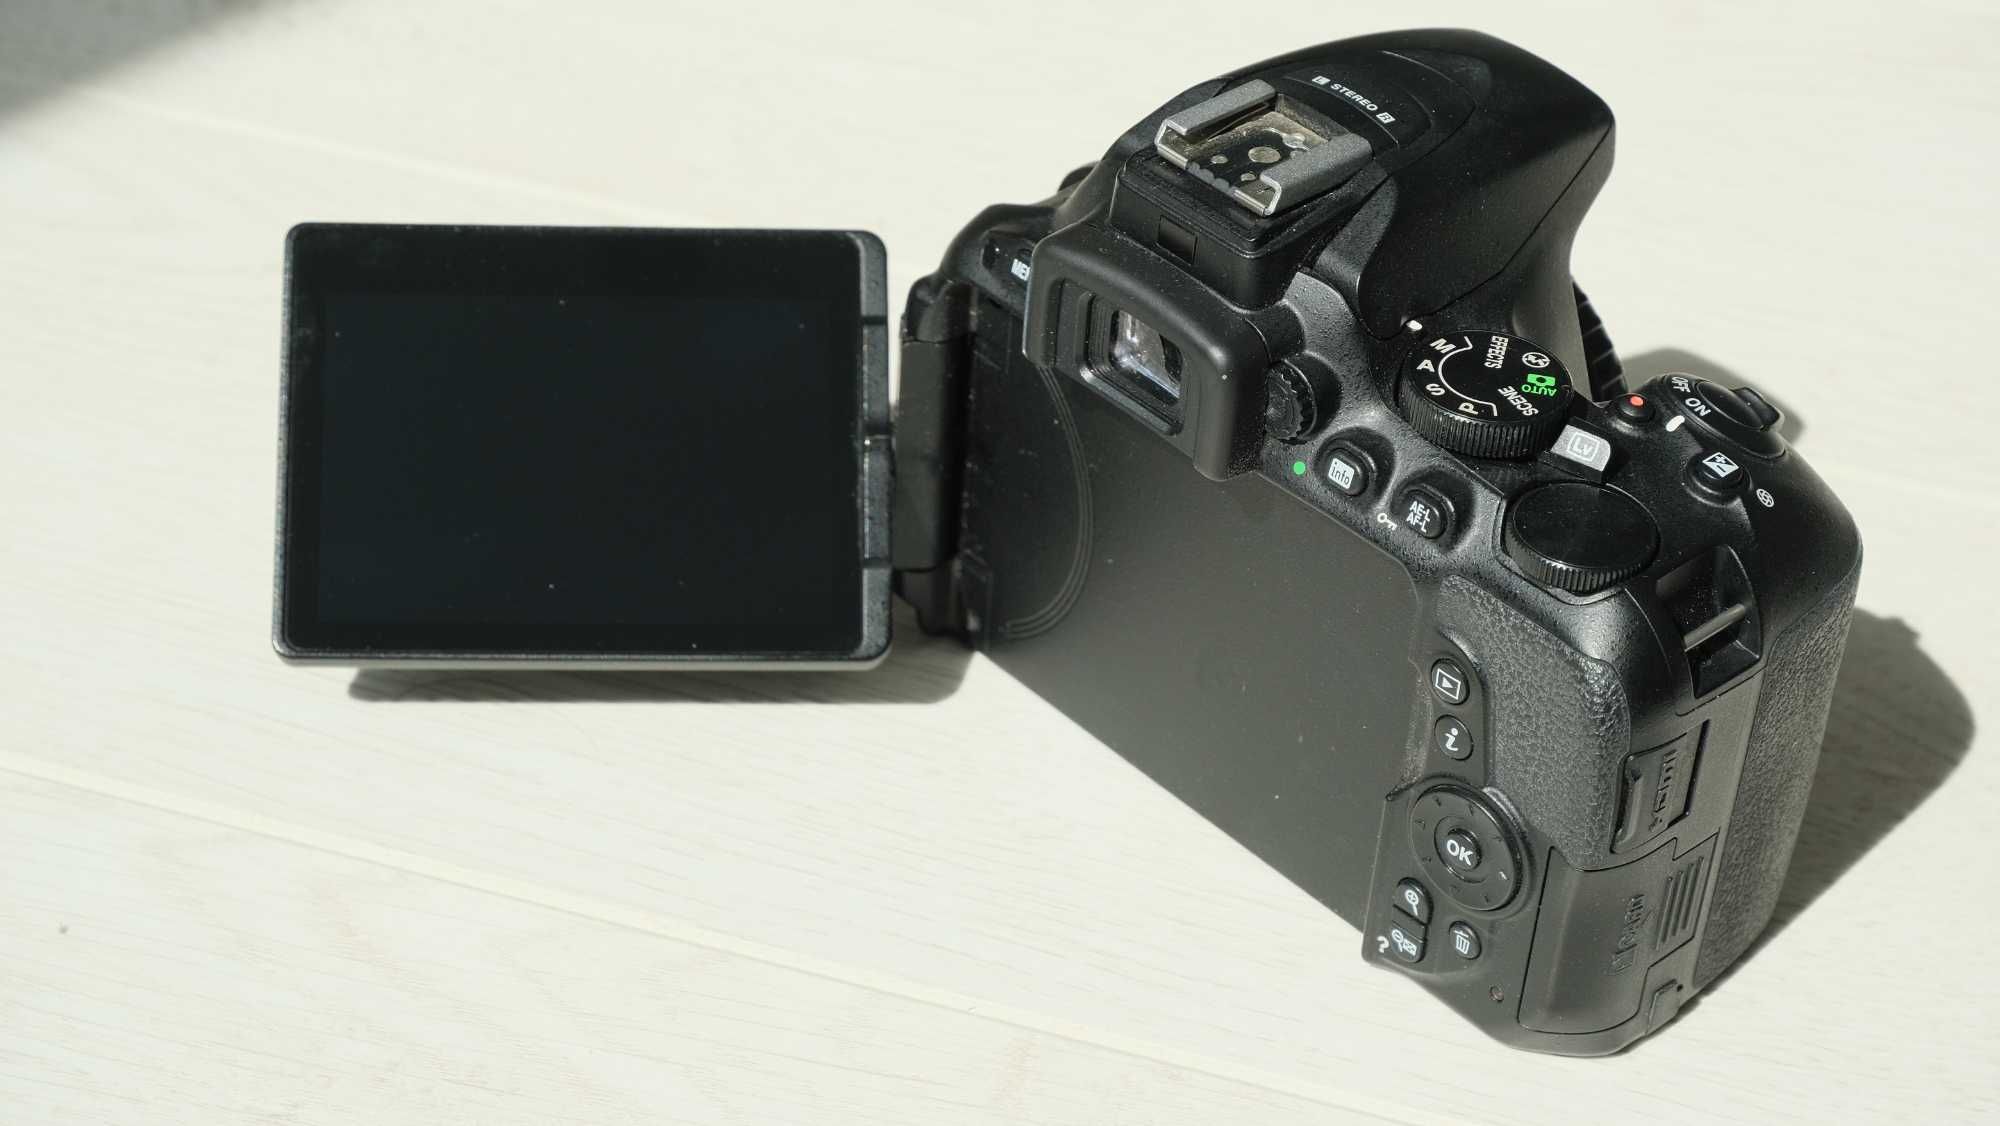 Nikon D5500 kit 16-55 f3.5-5.6 + 32Gb